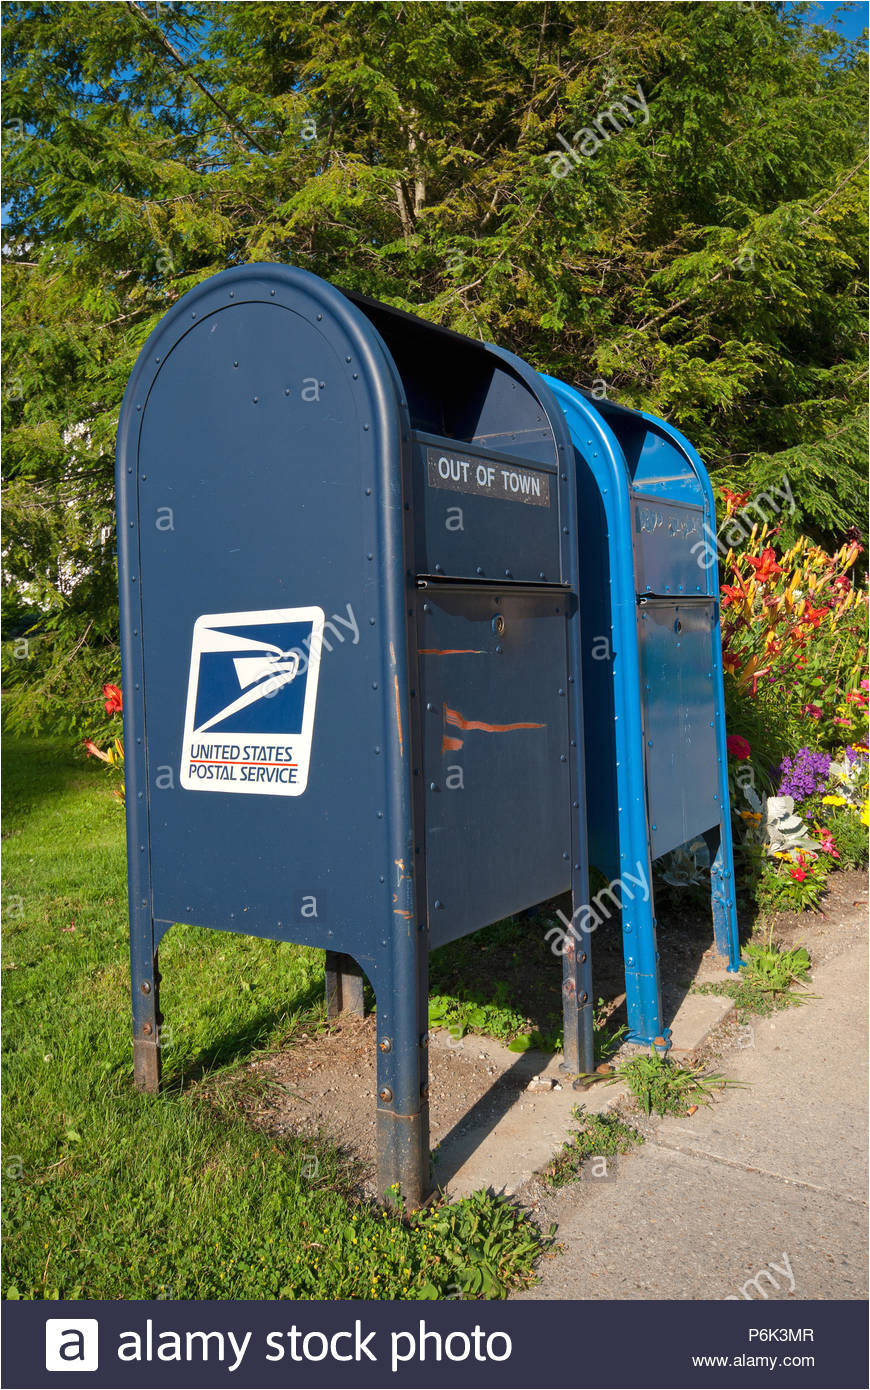 united states postal service box in stockbridge berkshire county massachusetts usa stockbild